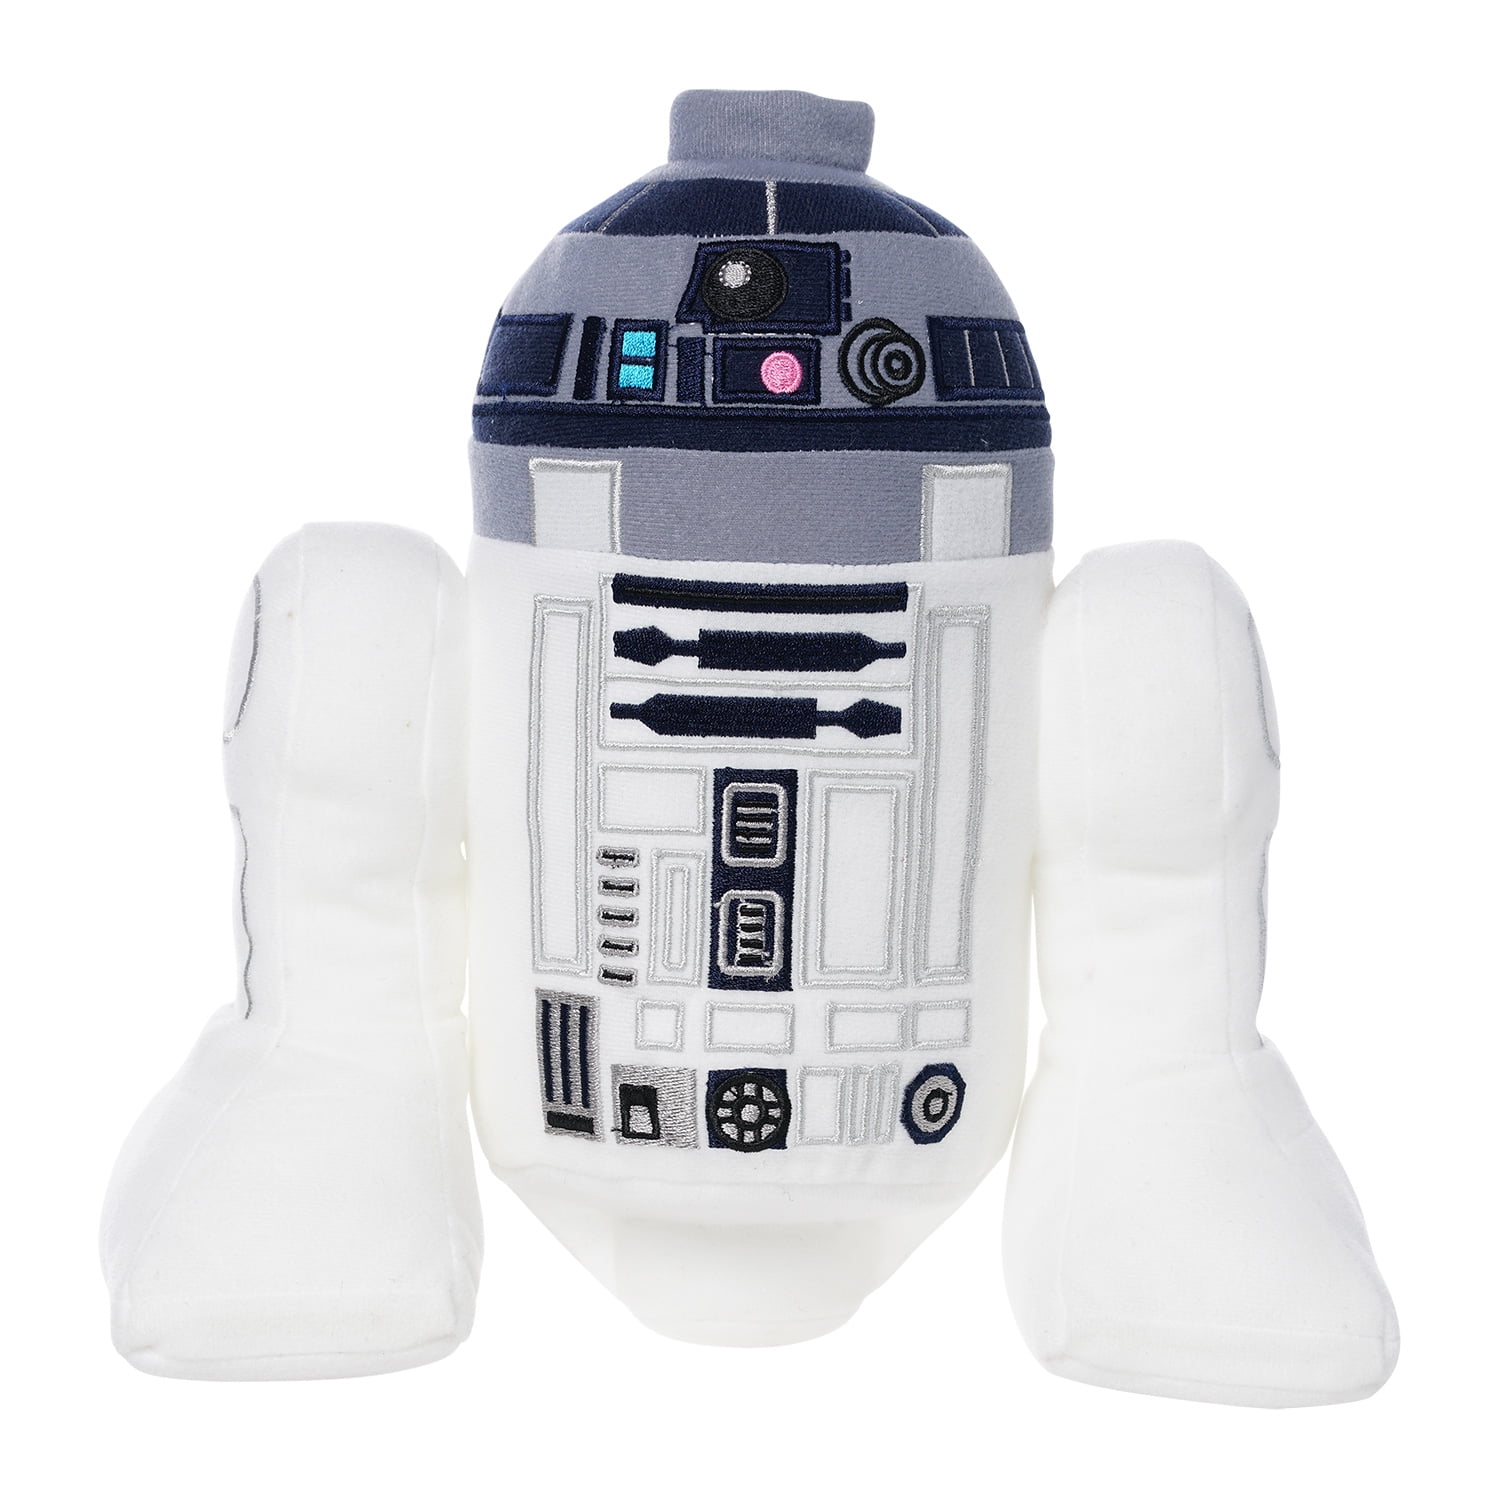 Star Wars R2-D2 10" Character - Walmart.com